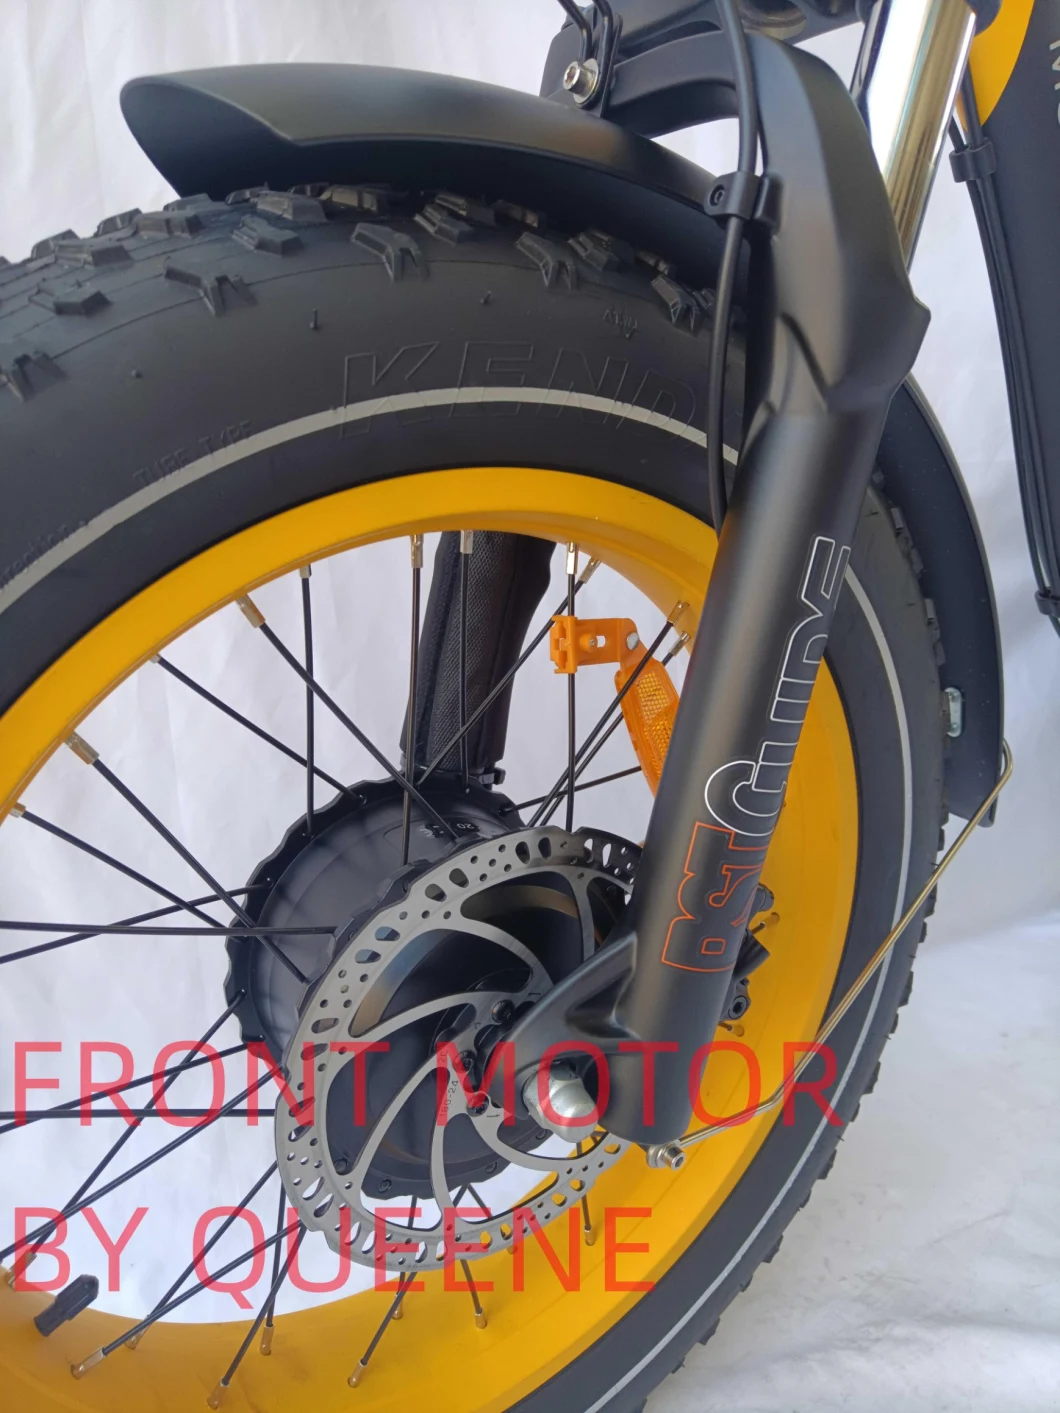 Queene Fat Tire 20 Inch Foldable City Electric Bike Rear Motor Lithium Battery Dual Motor Mountain Bike Snow Tire Dirt Ebike